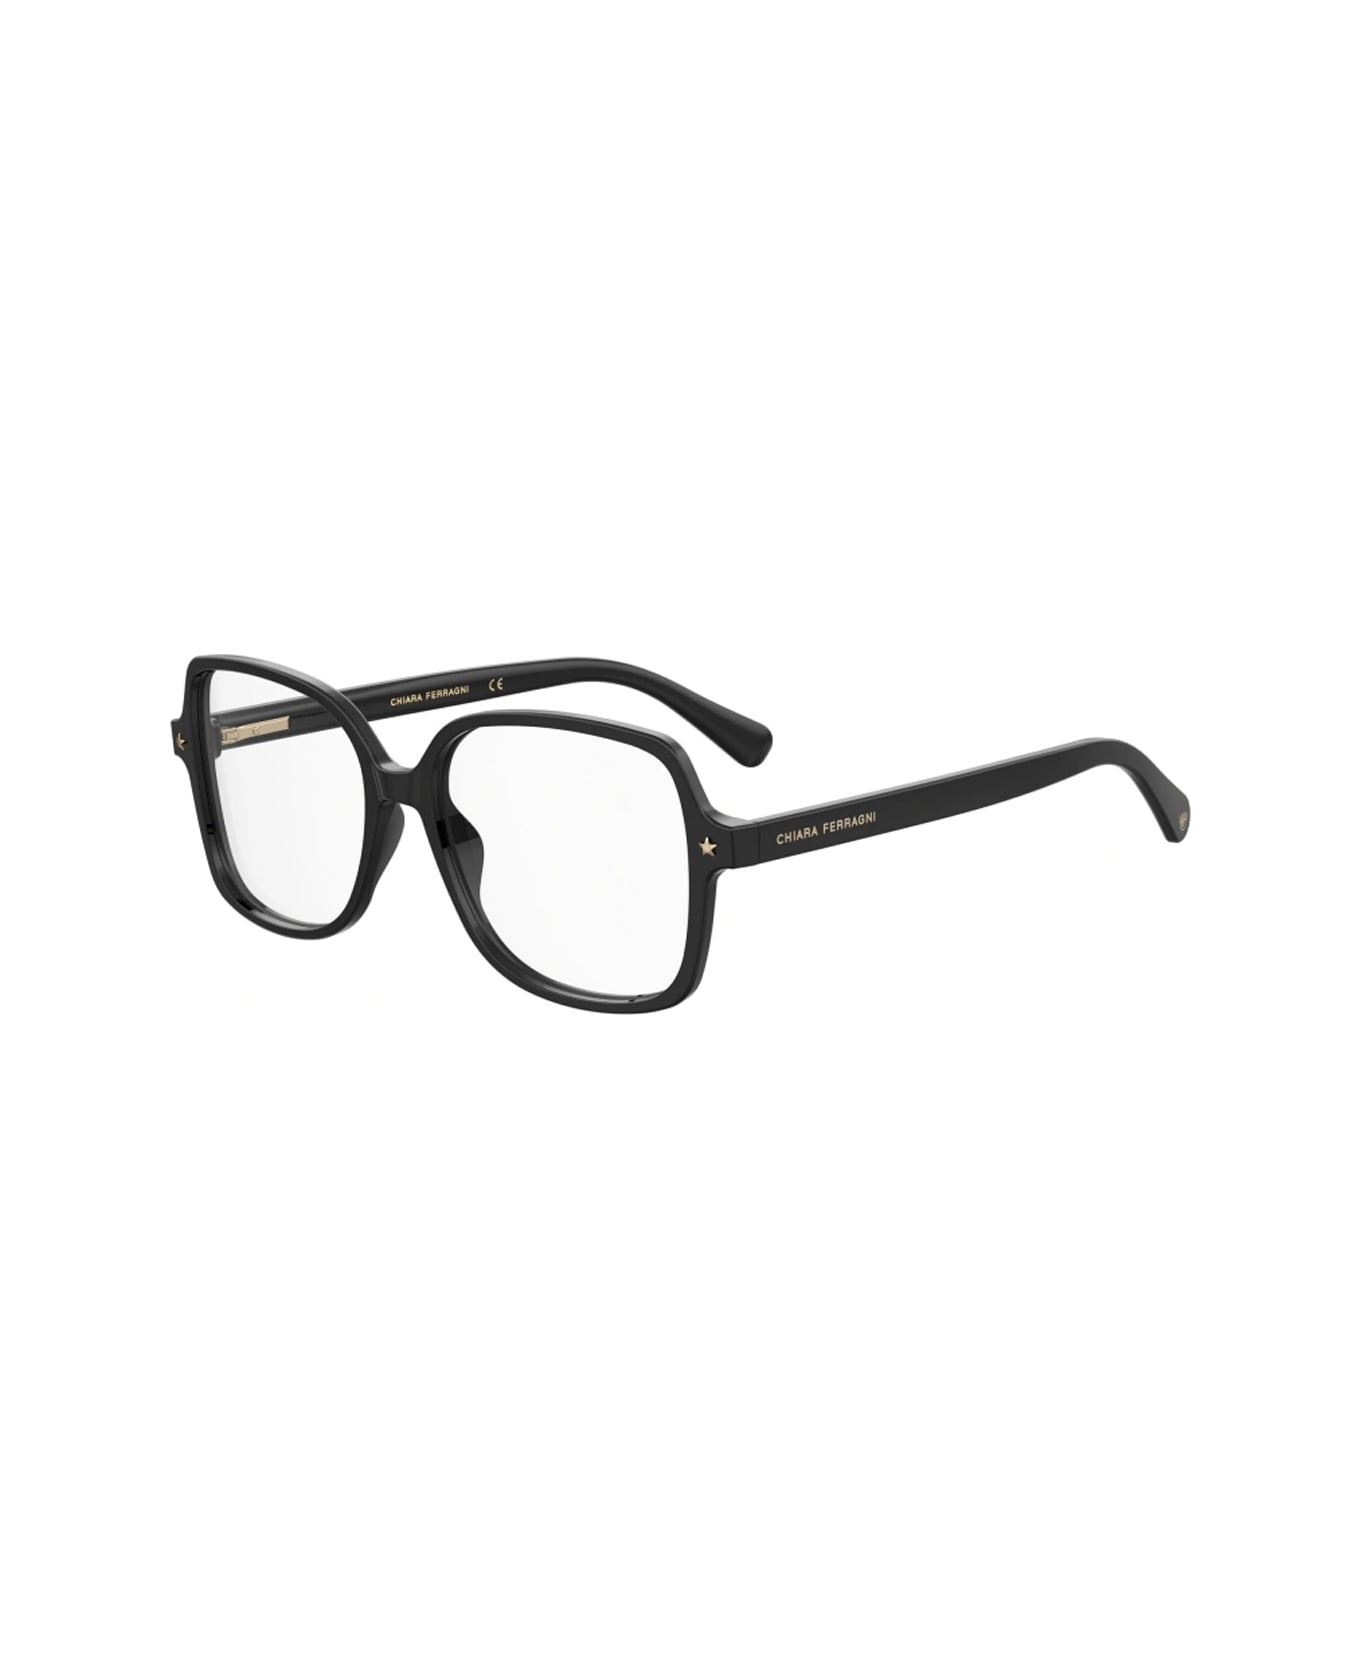 Chiara Ferragni Cf 1026 807/16 Black Glasses - Nero